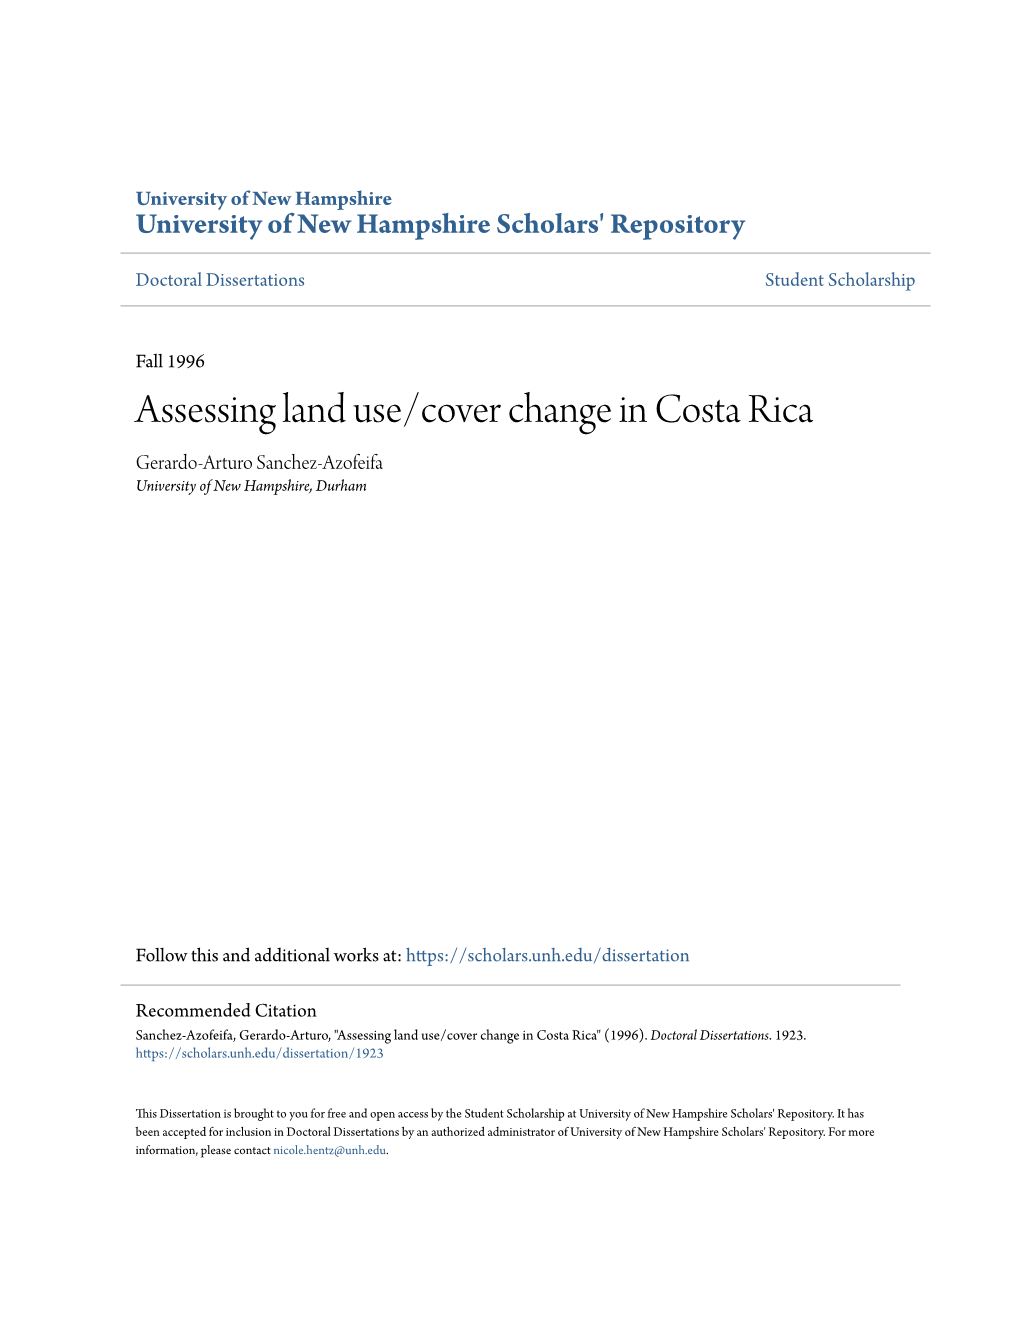 Assessing Land Use/Cover Change in Costa Rica Gerardo-Arturo Sanchez-Azofeifa University of New Hampshire, Durham